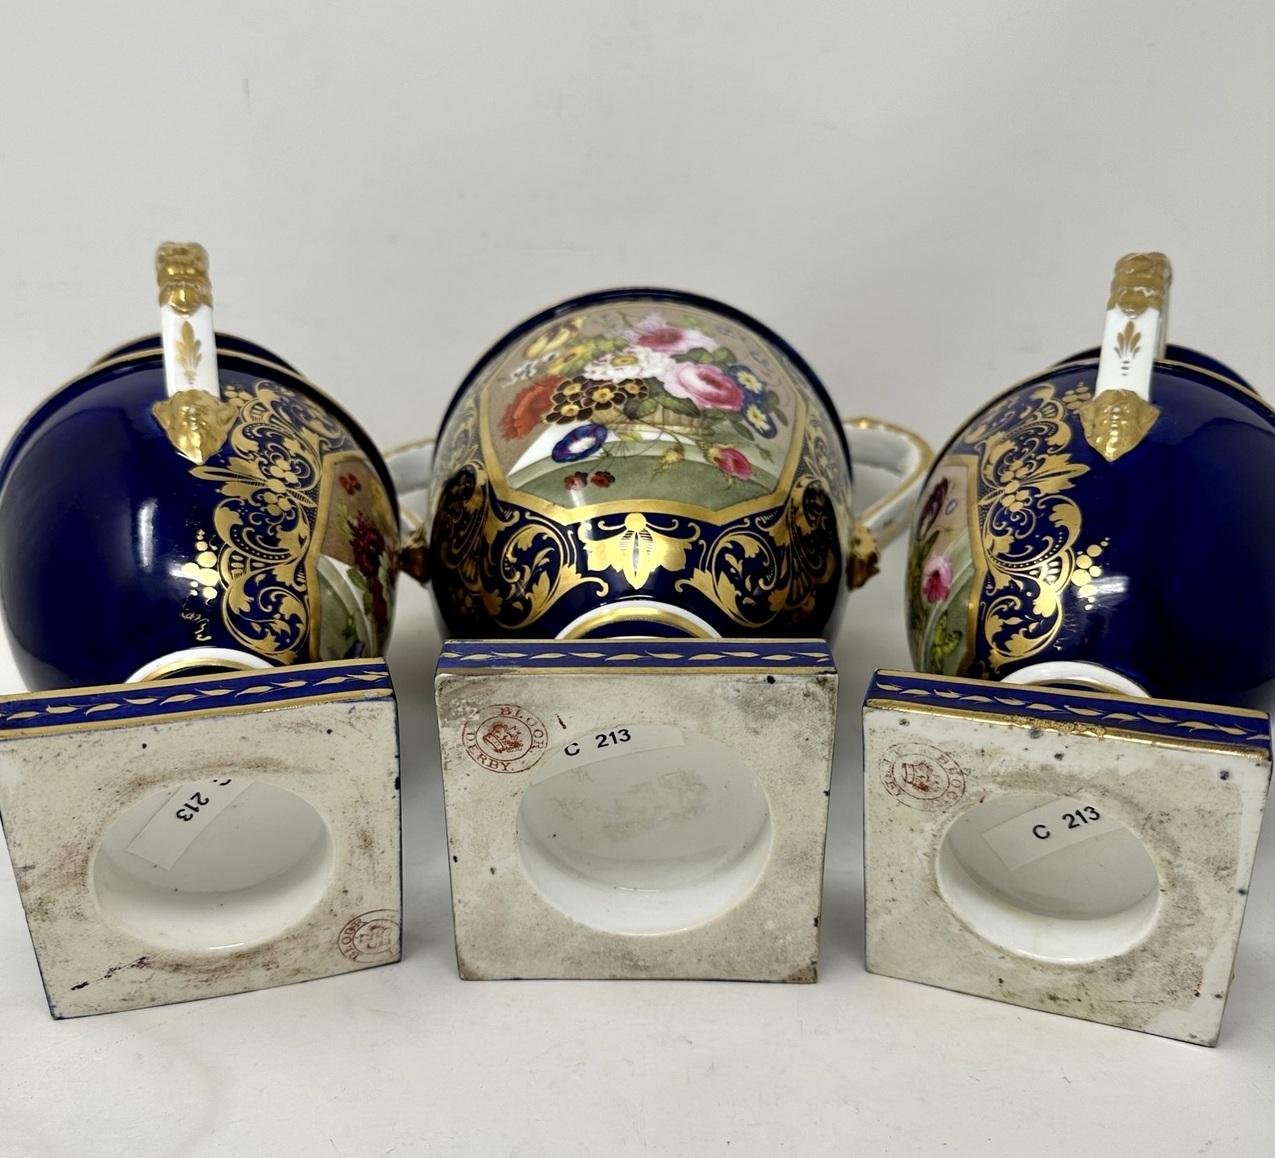 Antique Garniture English Royal Crown Derby Porcelain Vases by Thomas Steel 19C  For Sale 5